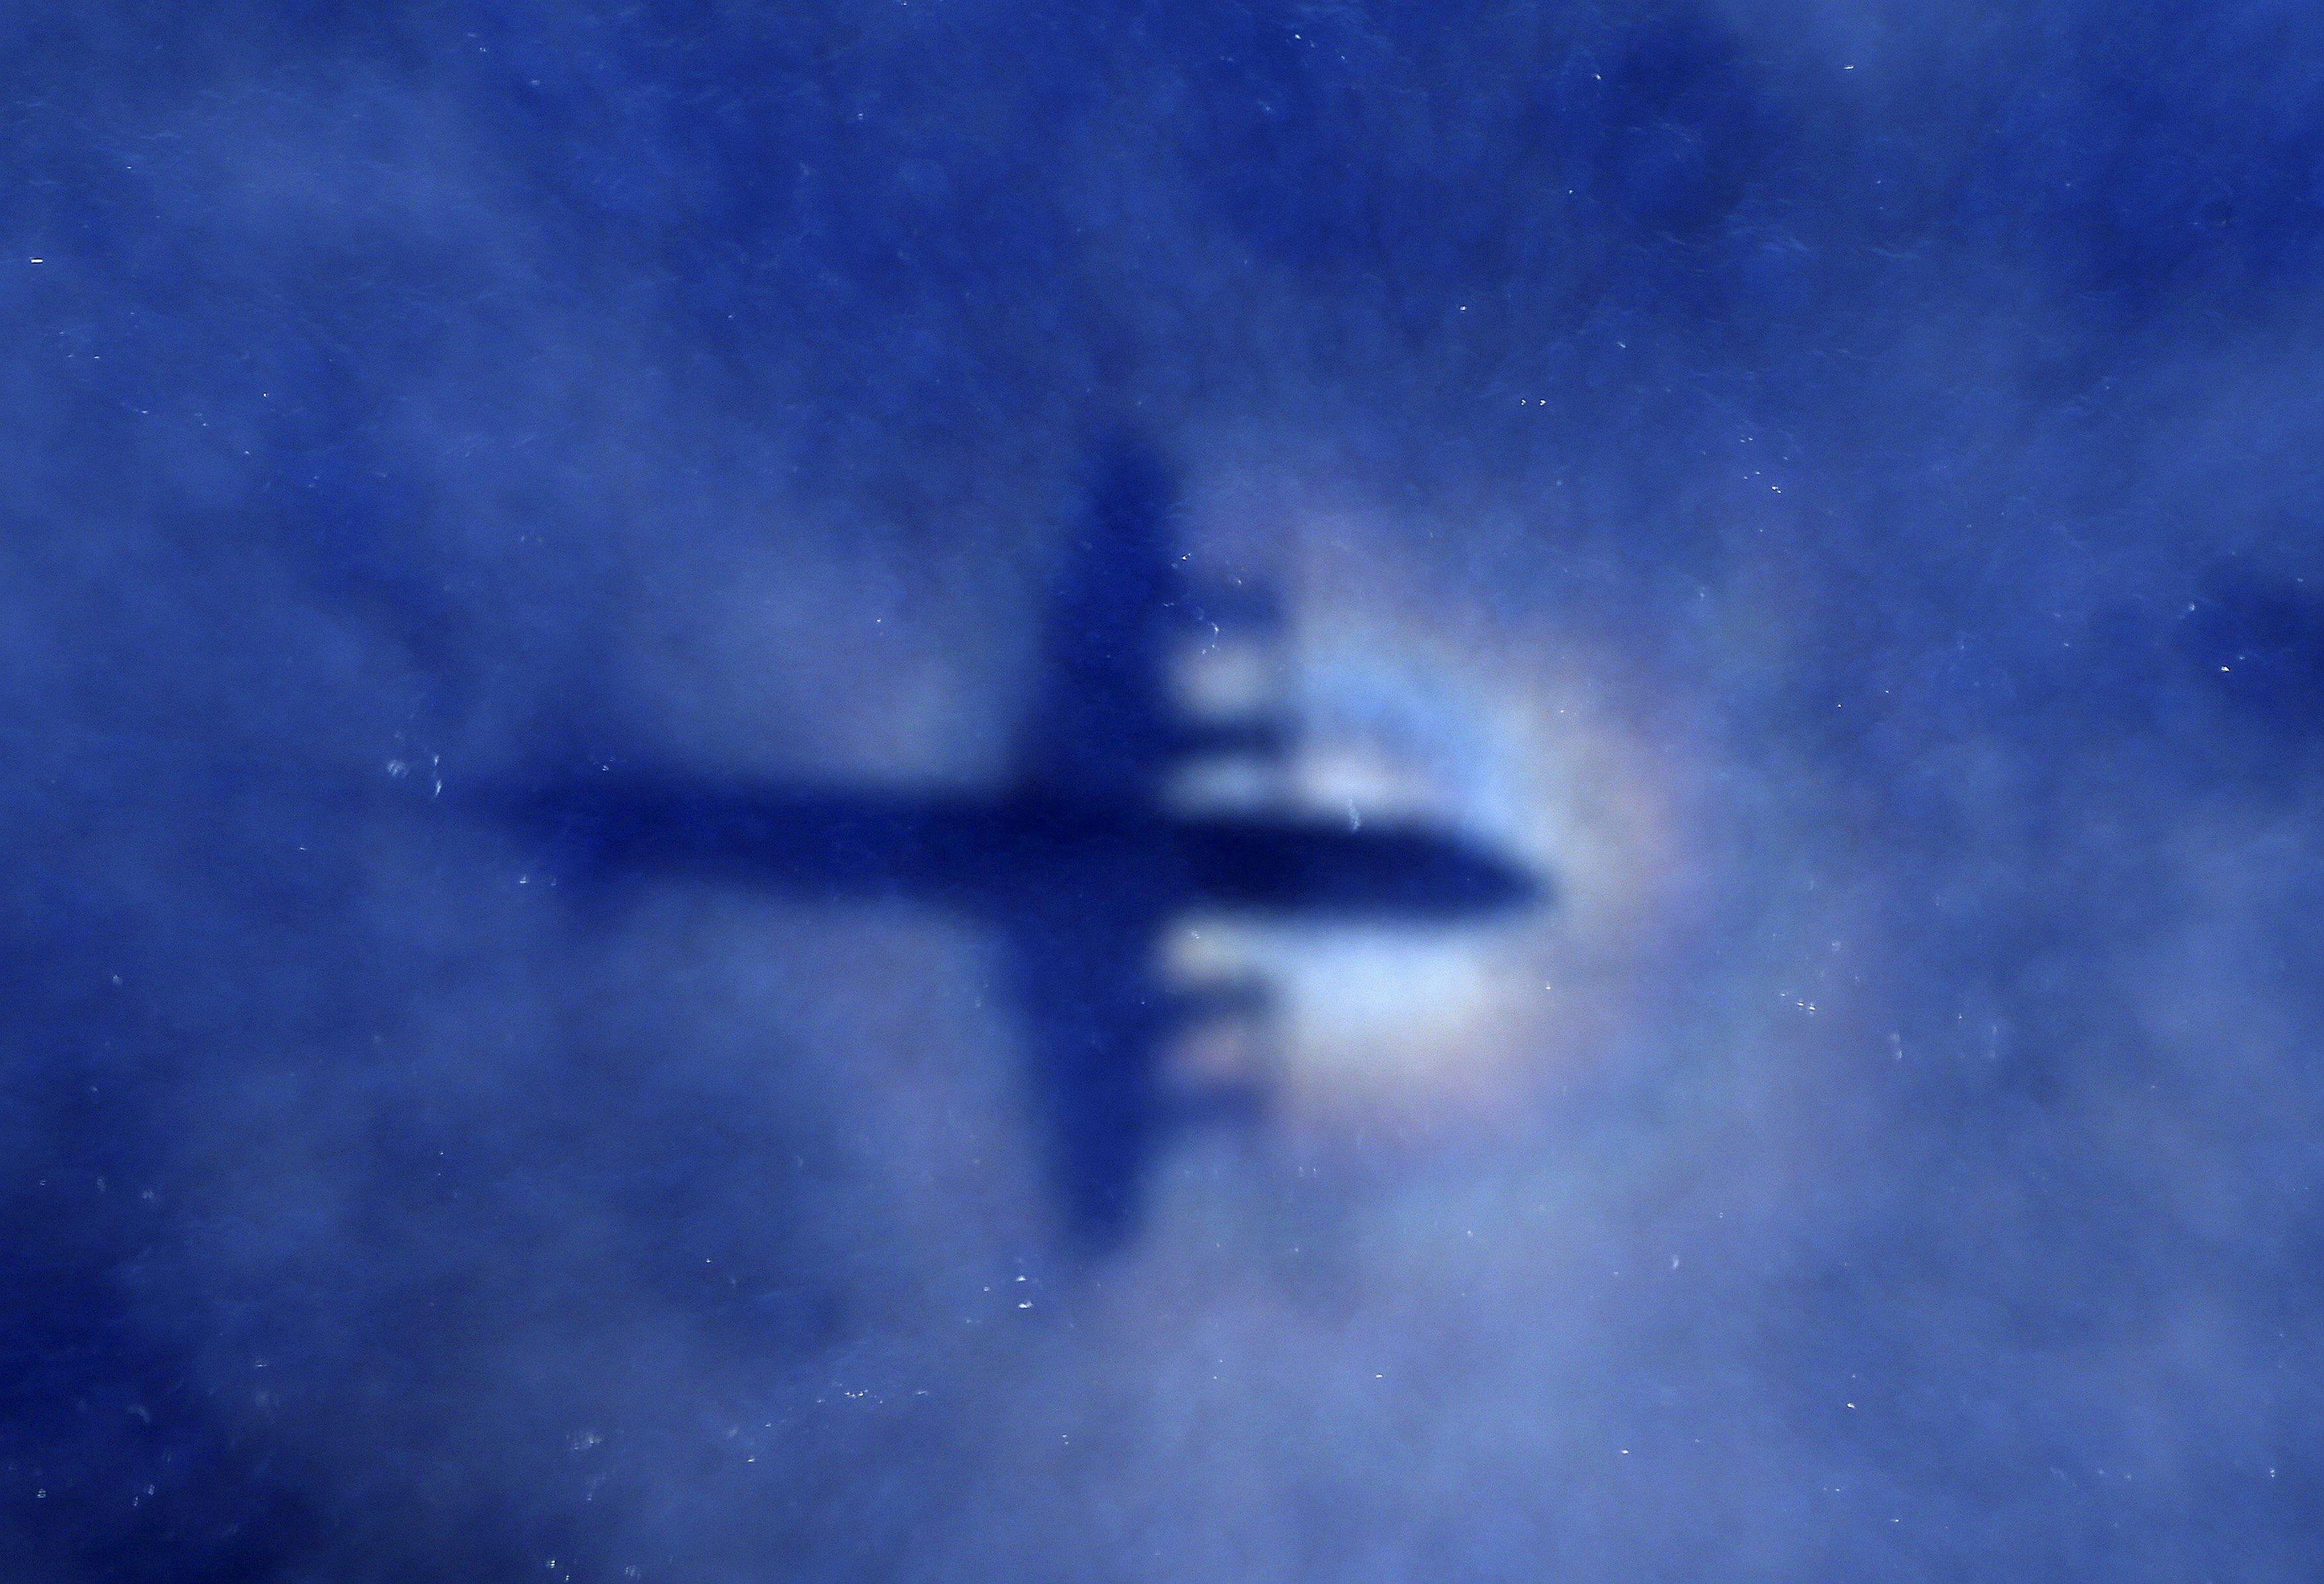 All at sea: Australia's search for MH370 under scrutiny